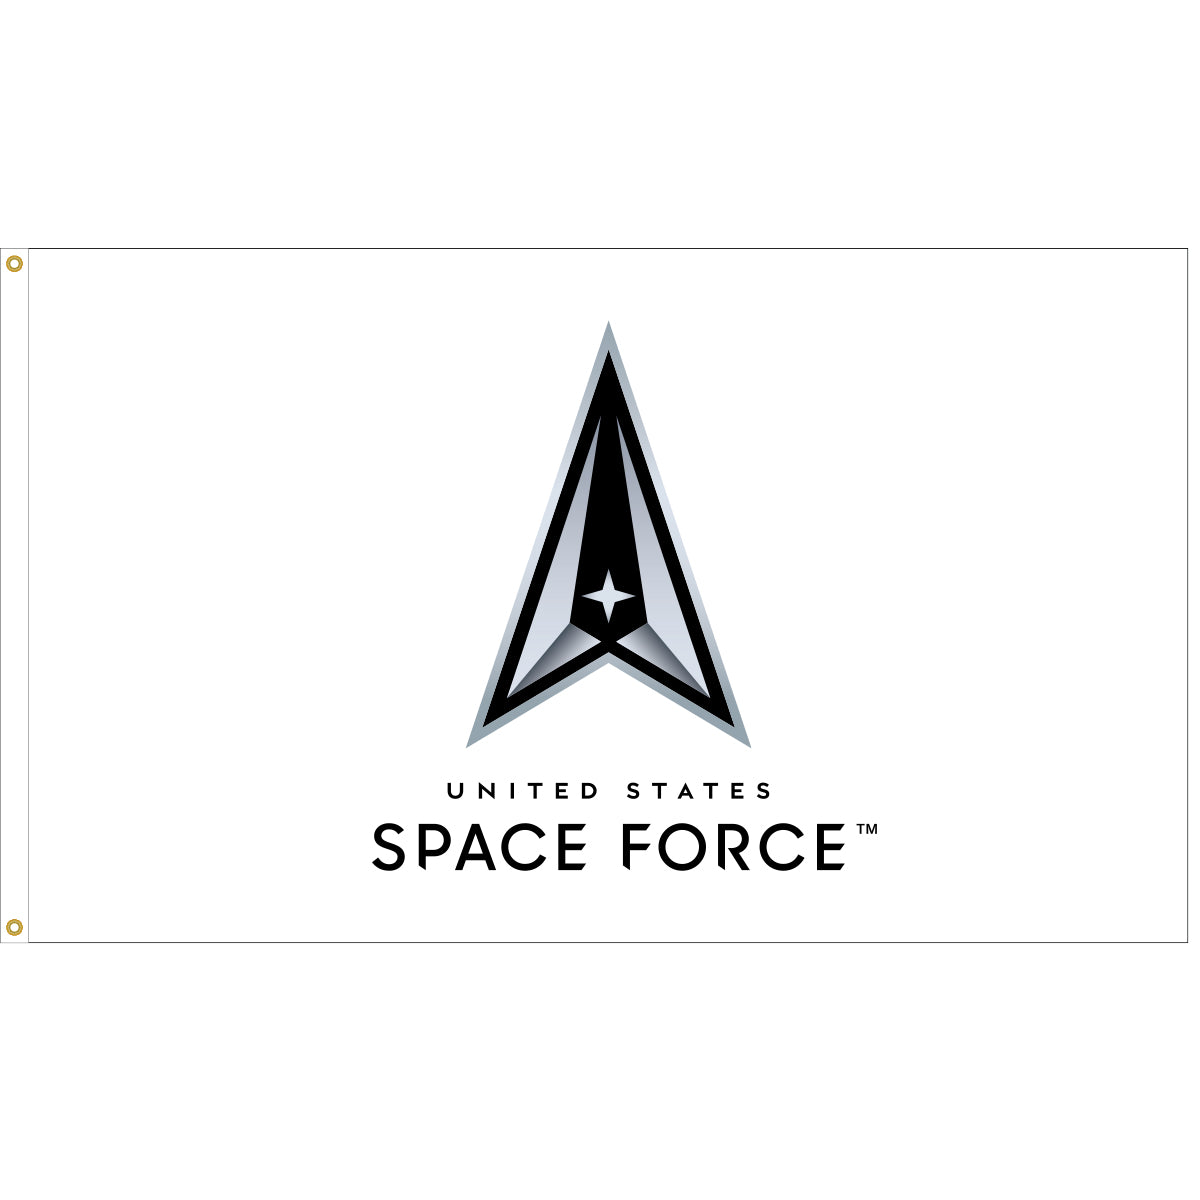 3'x5' Nylon Outdoor Space Force Logo Flag